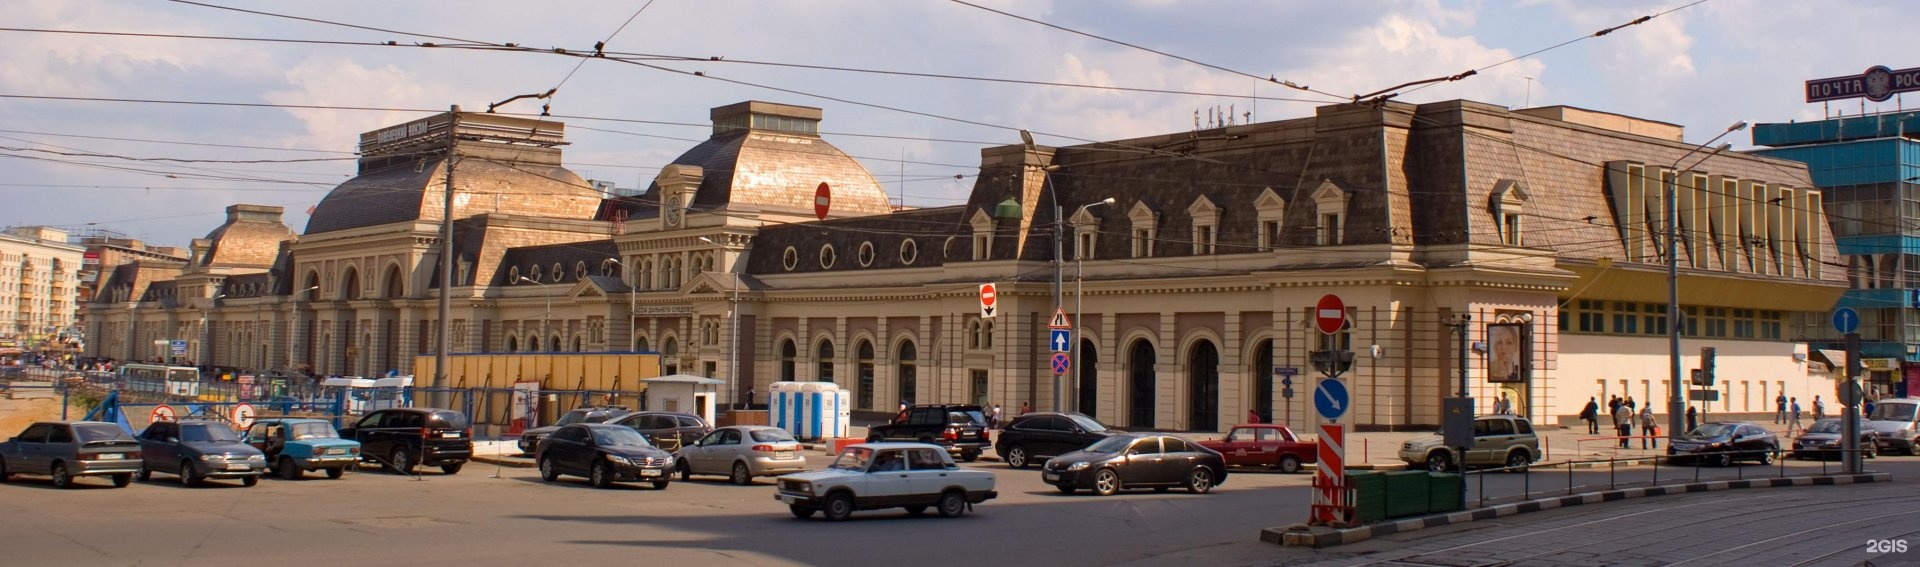 павелецкий вокзал на